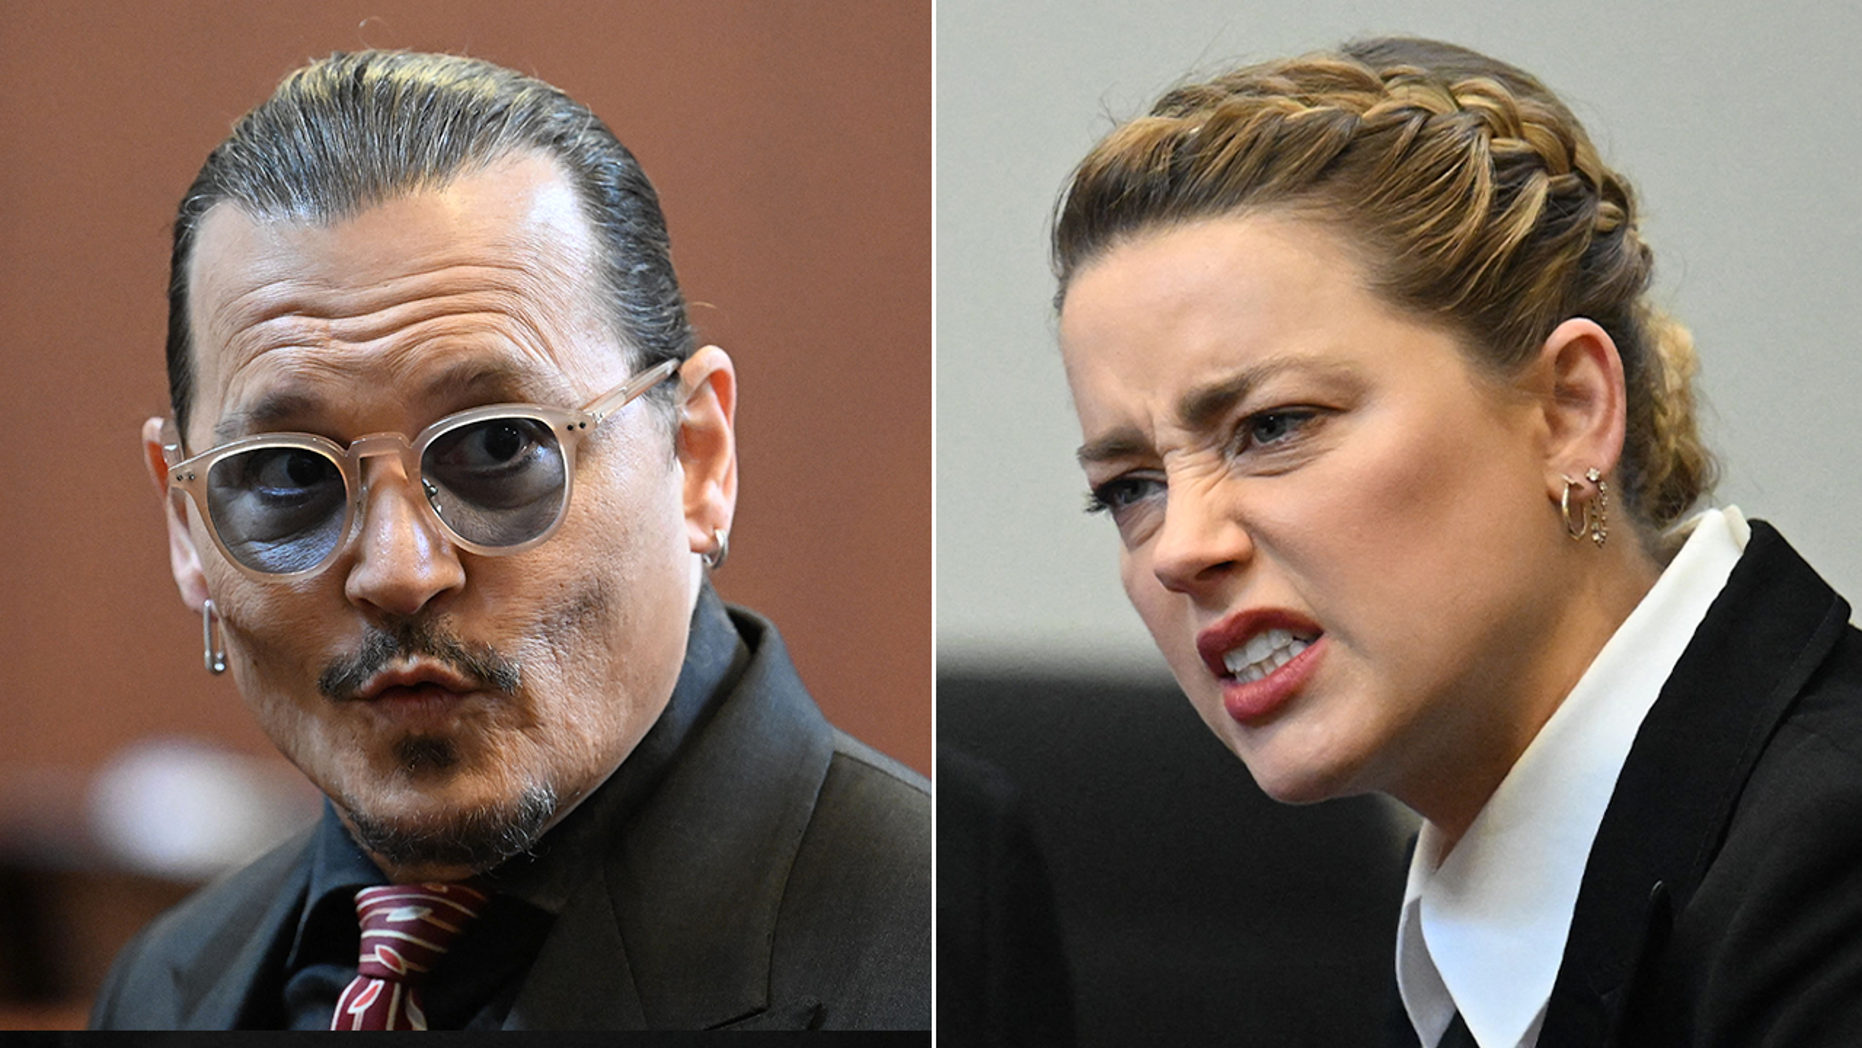 Johnny Depp v. Amber Heard: Biggest bombshells